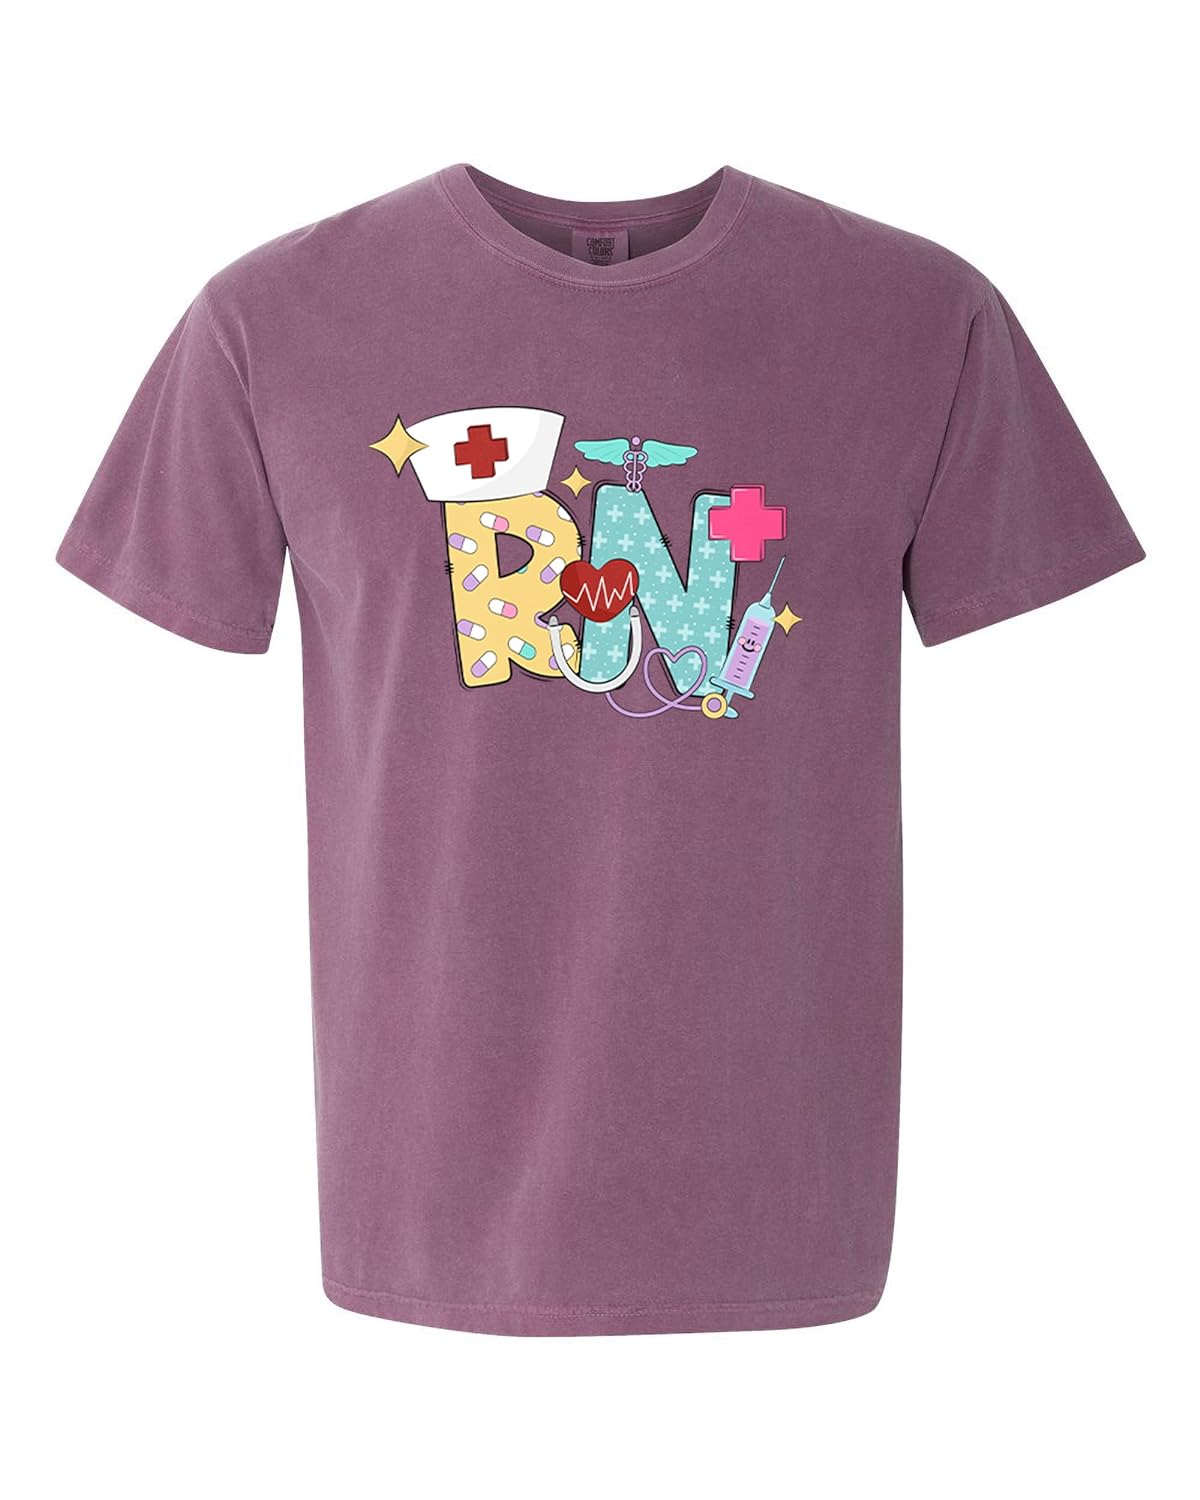 Registered Nurse shirt for women purple